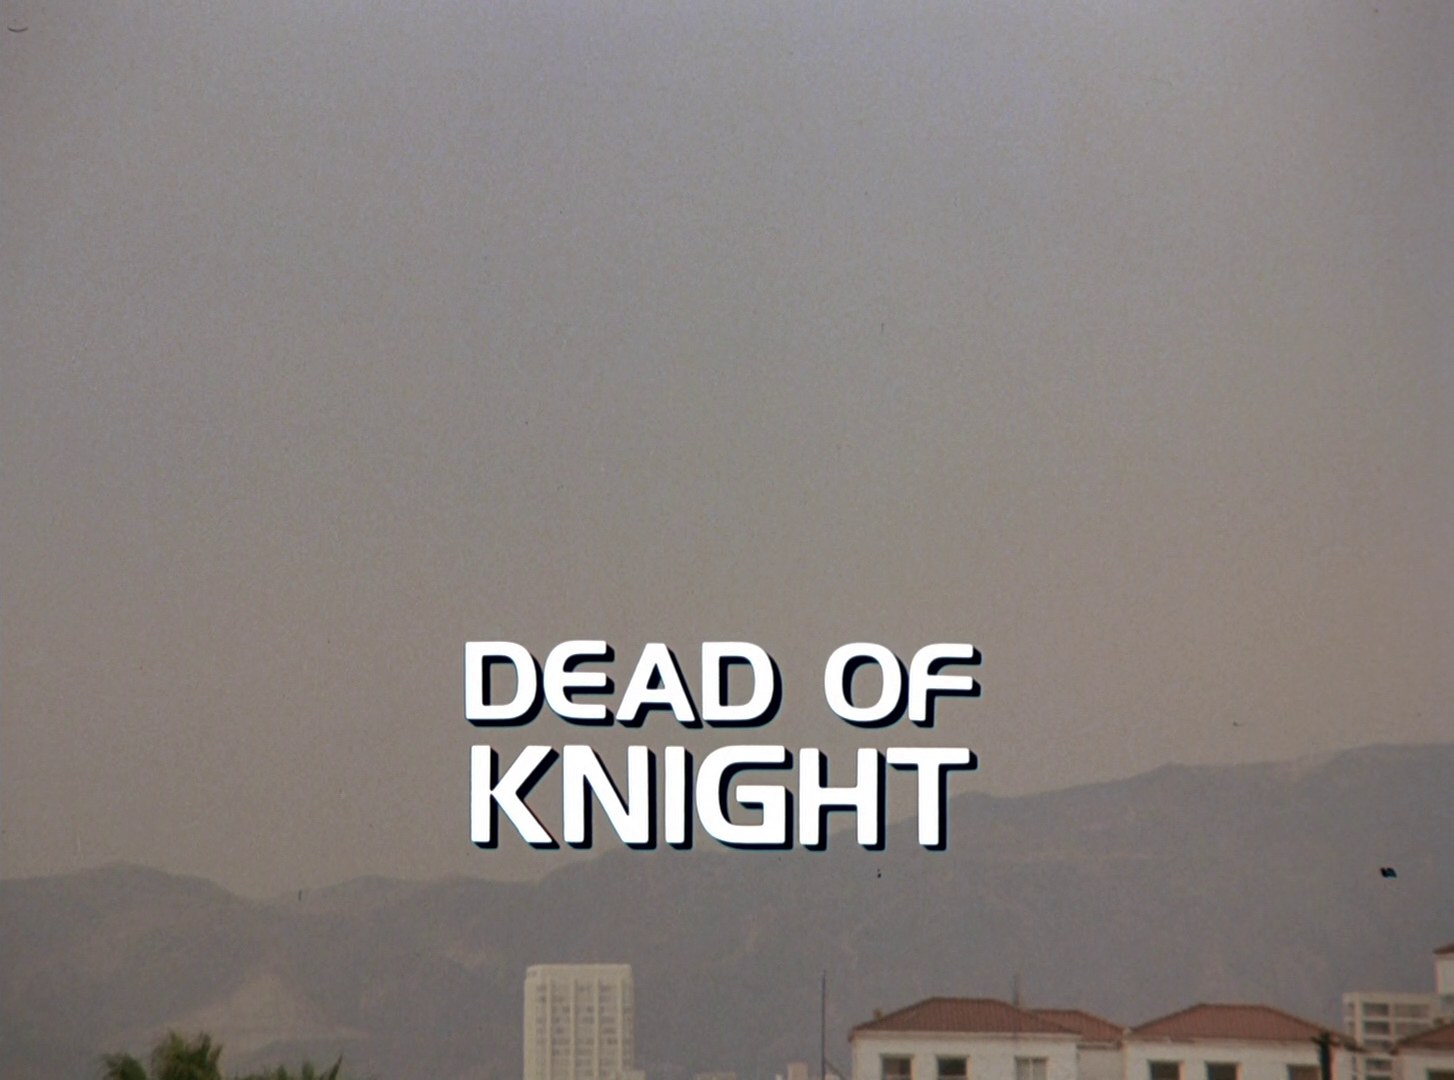 Knight Rider Season 3 - Episode 50 - Dead Of Knight - Photo 1